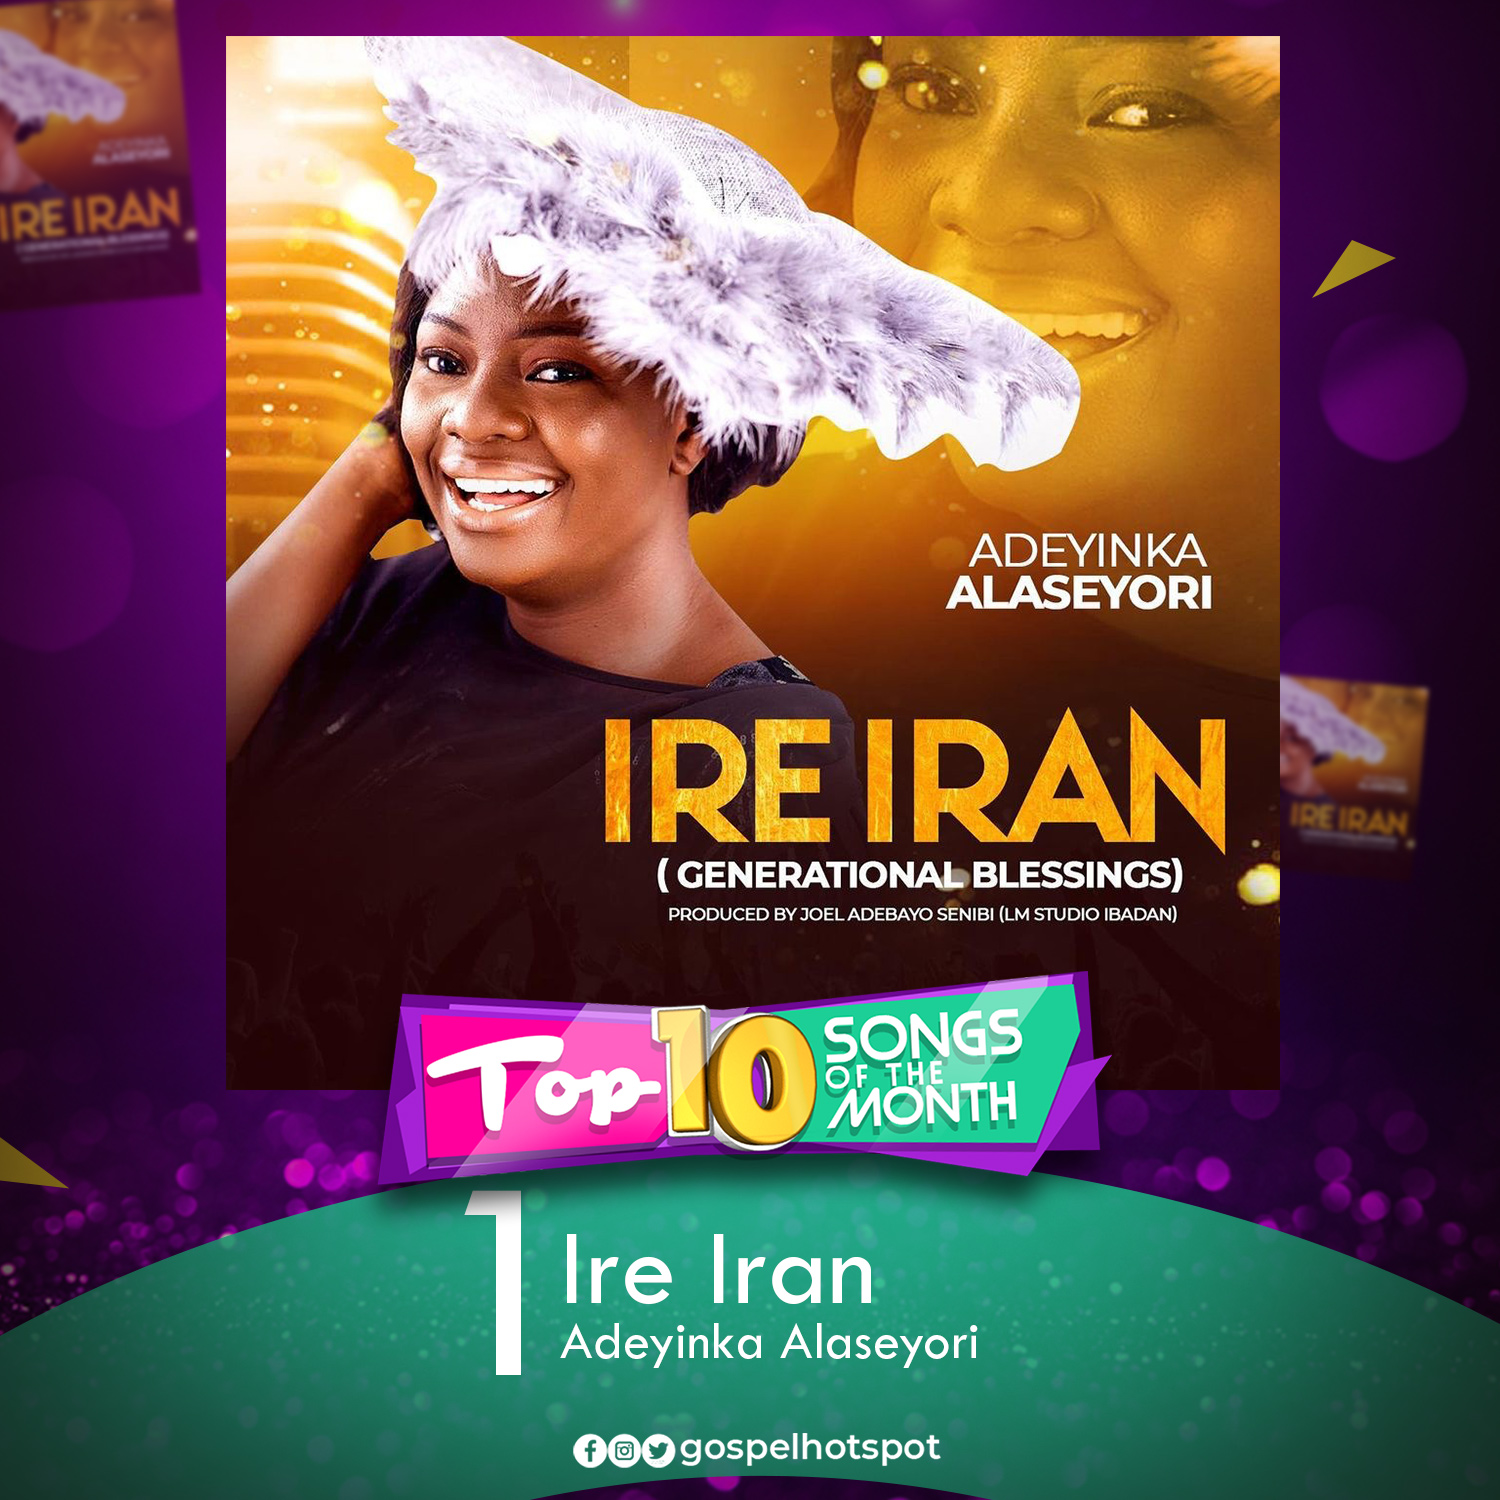 Ire Iran – Adeyinka Alaseyori